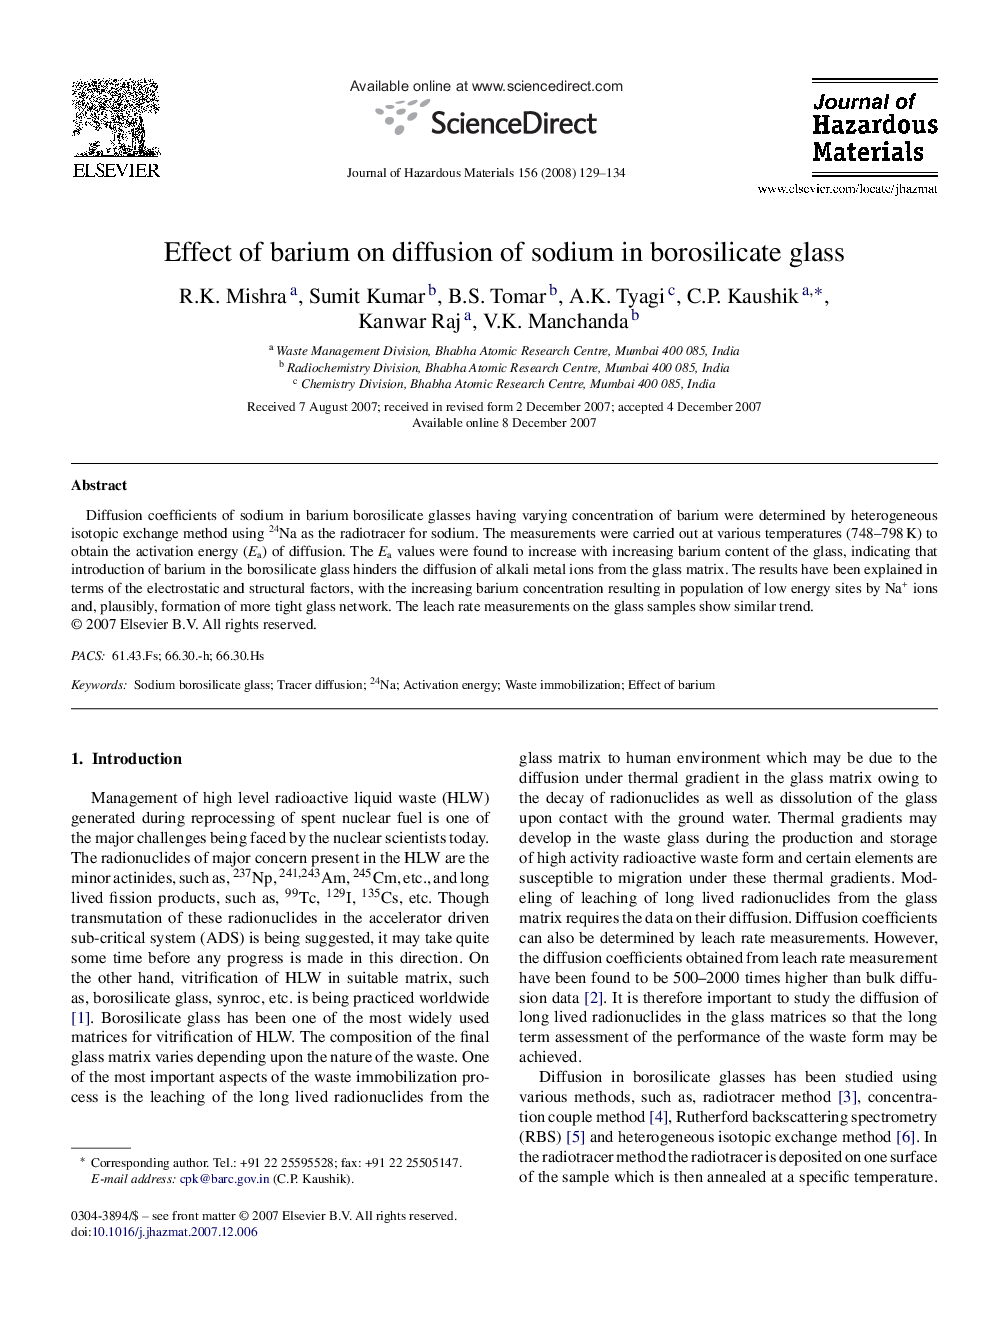 Effect of barium on diffusion of sodium in borosilicate glass